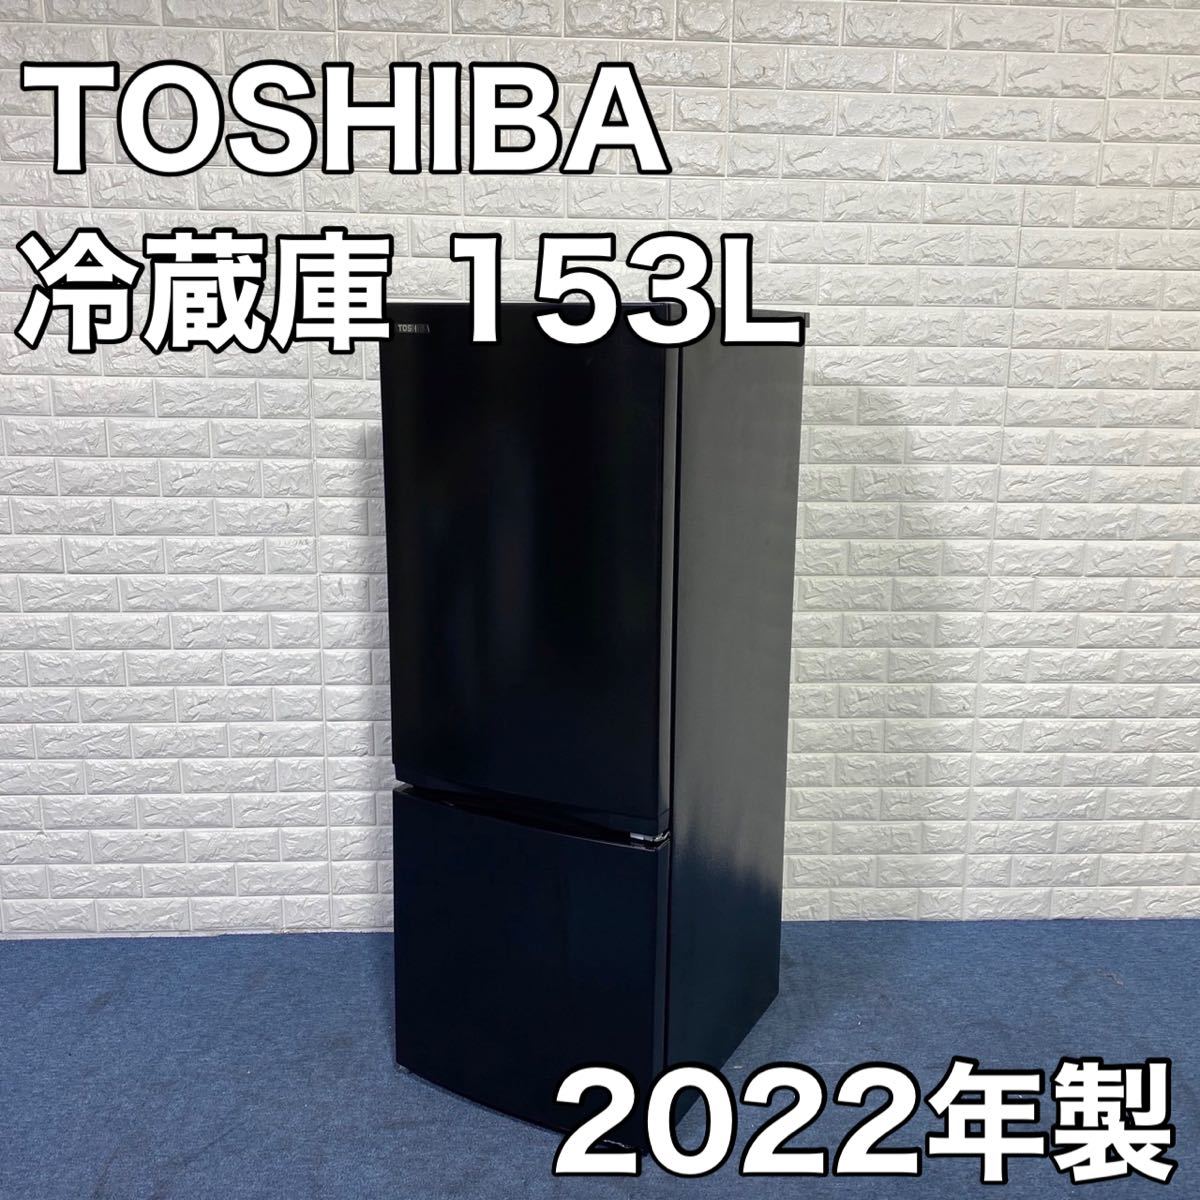 TOSHIBA 東芝 冷蔵庫 GR-T15BS(K) 153L 2022年製 家電 極美品 ic.sch.id